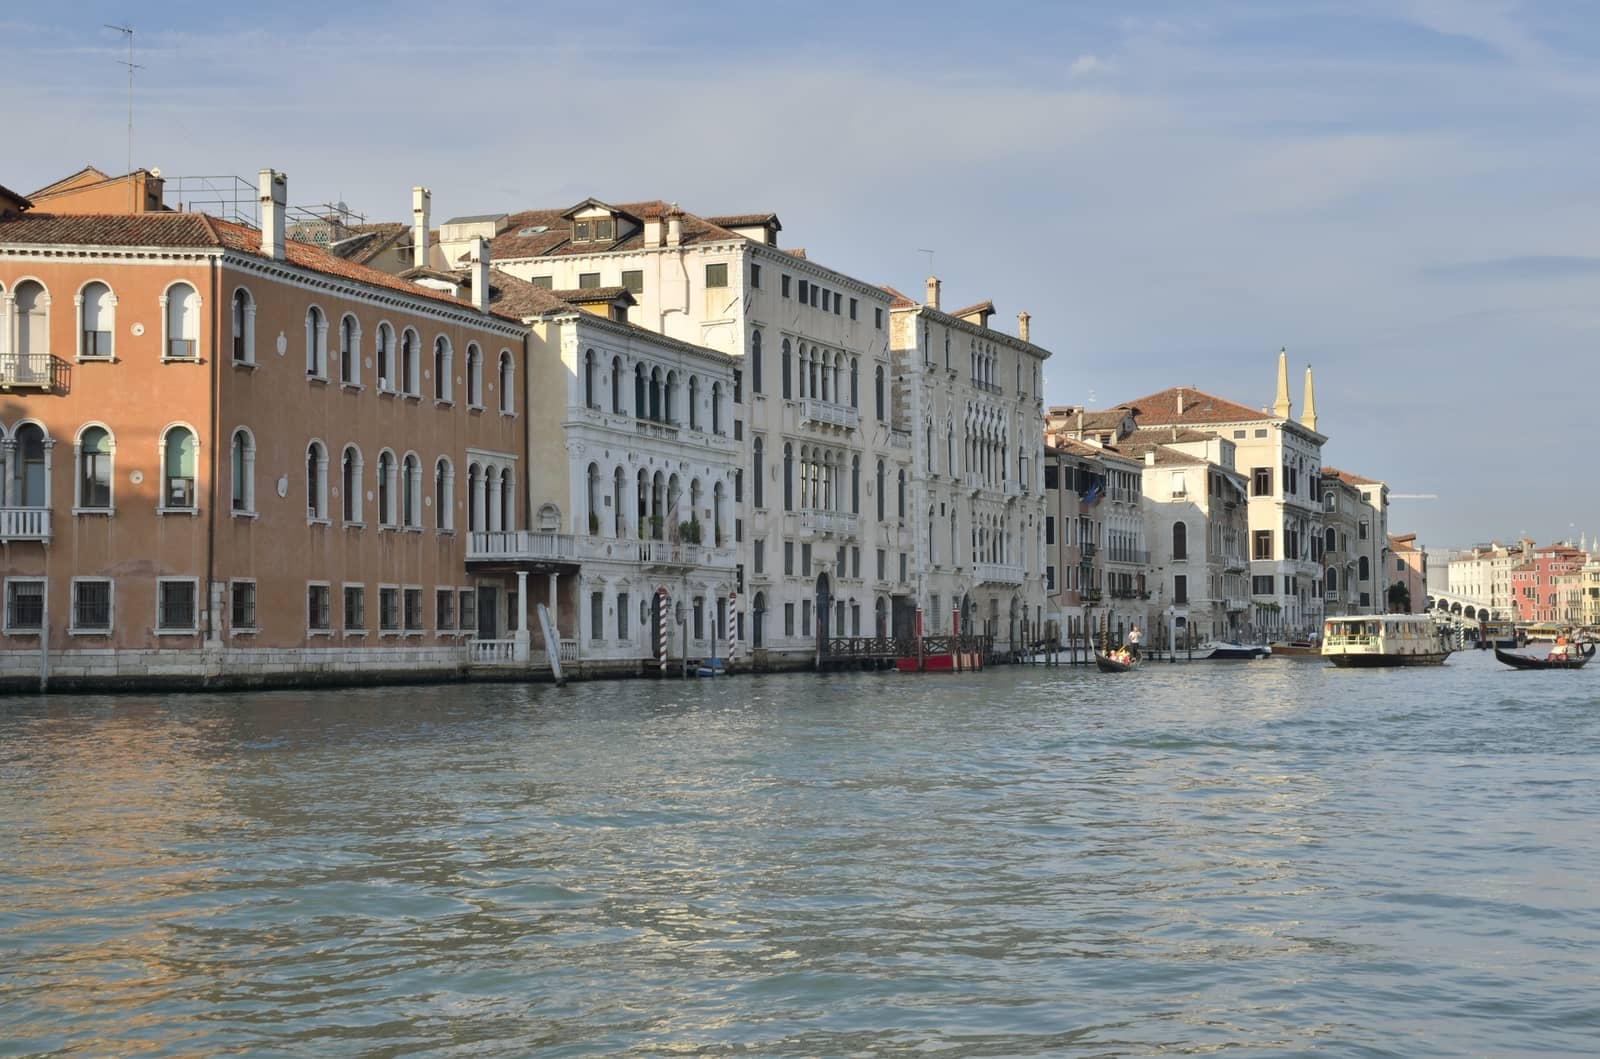 Vaporetto and gondolas by  the Grand Canal, Venice, Italy.